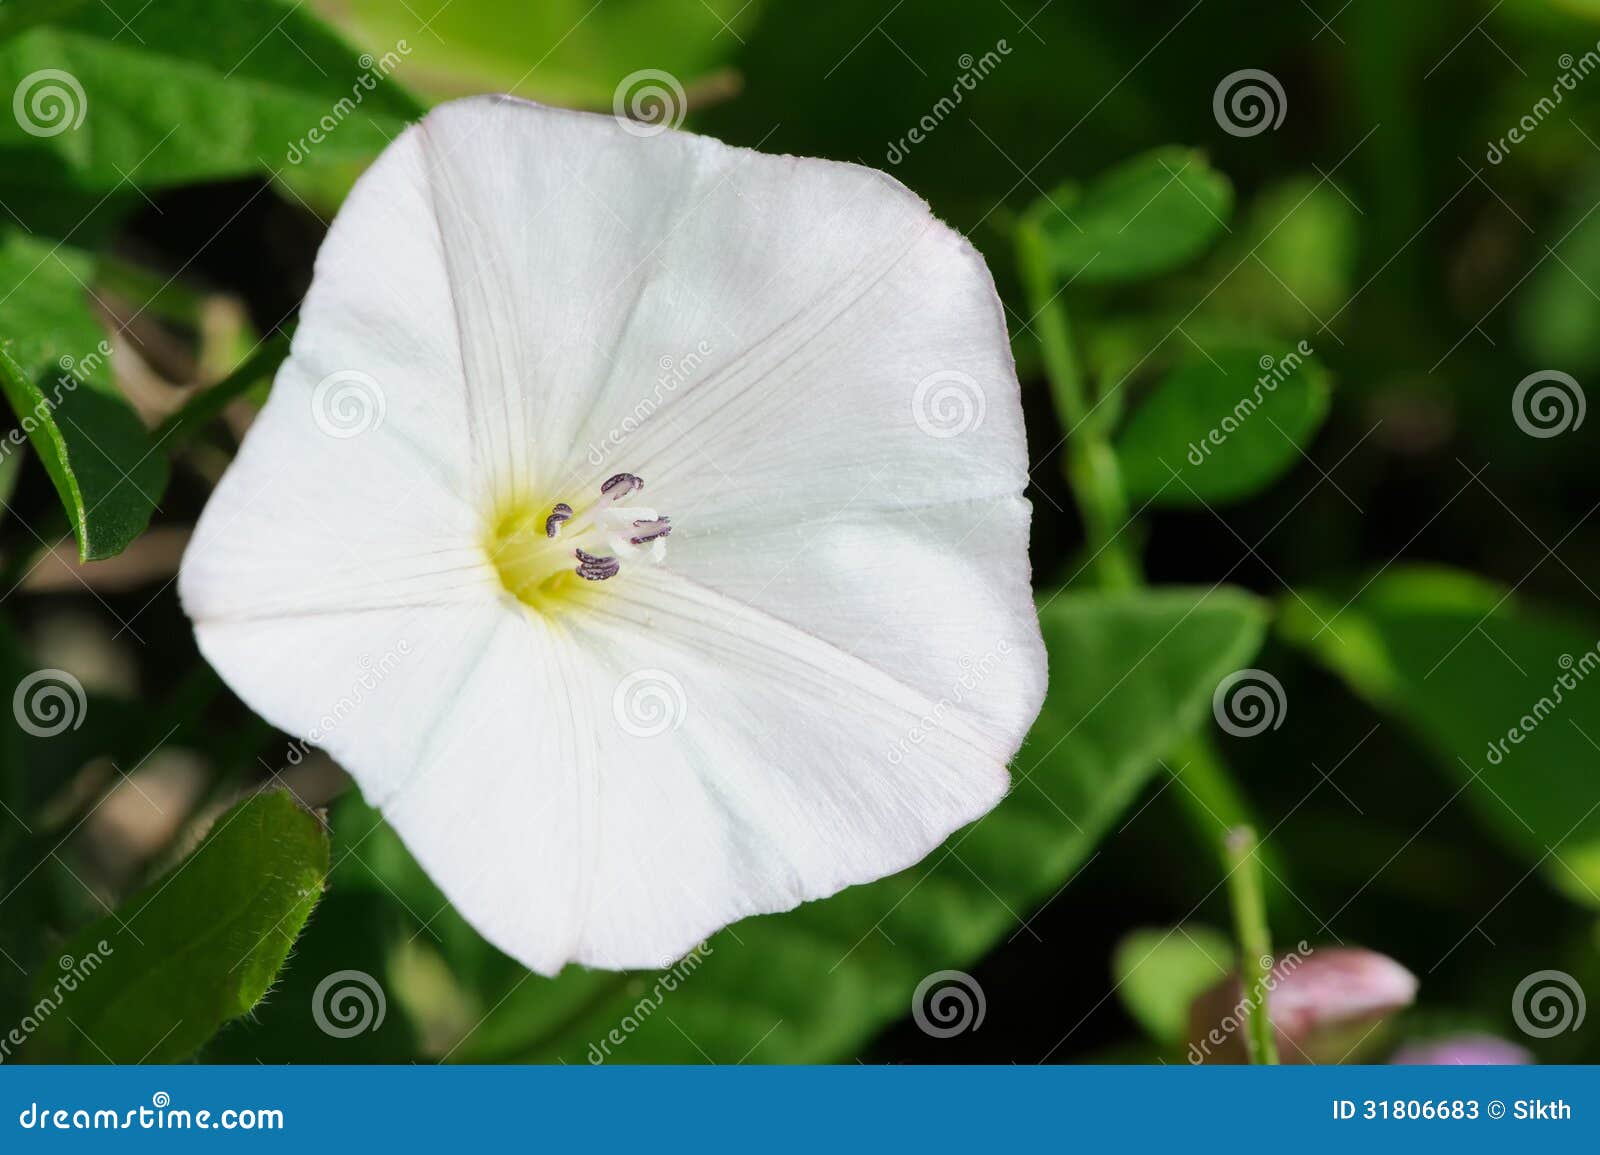 white convolvulus (bindweed) flower close-up